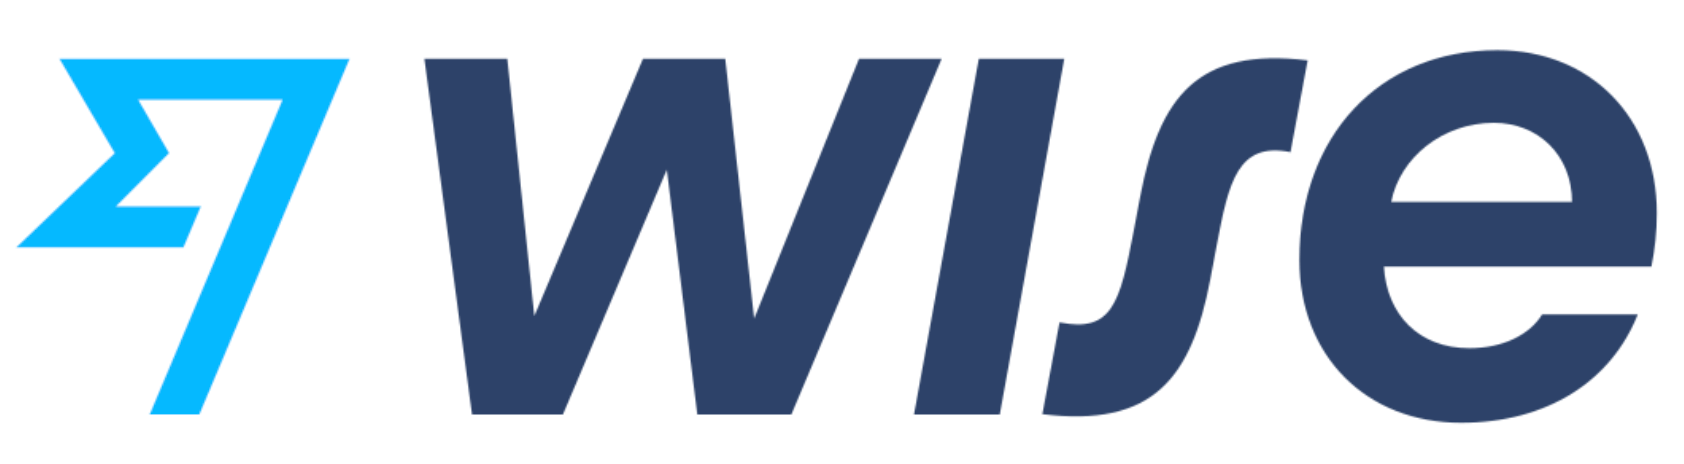 wise-logo